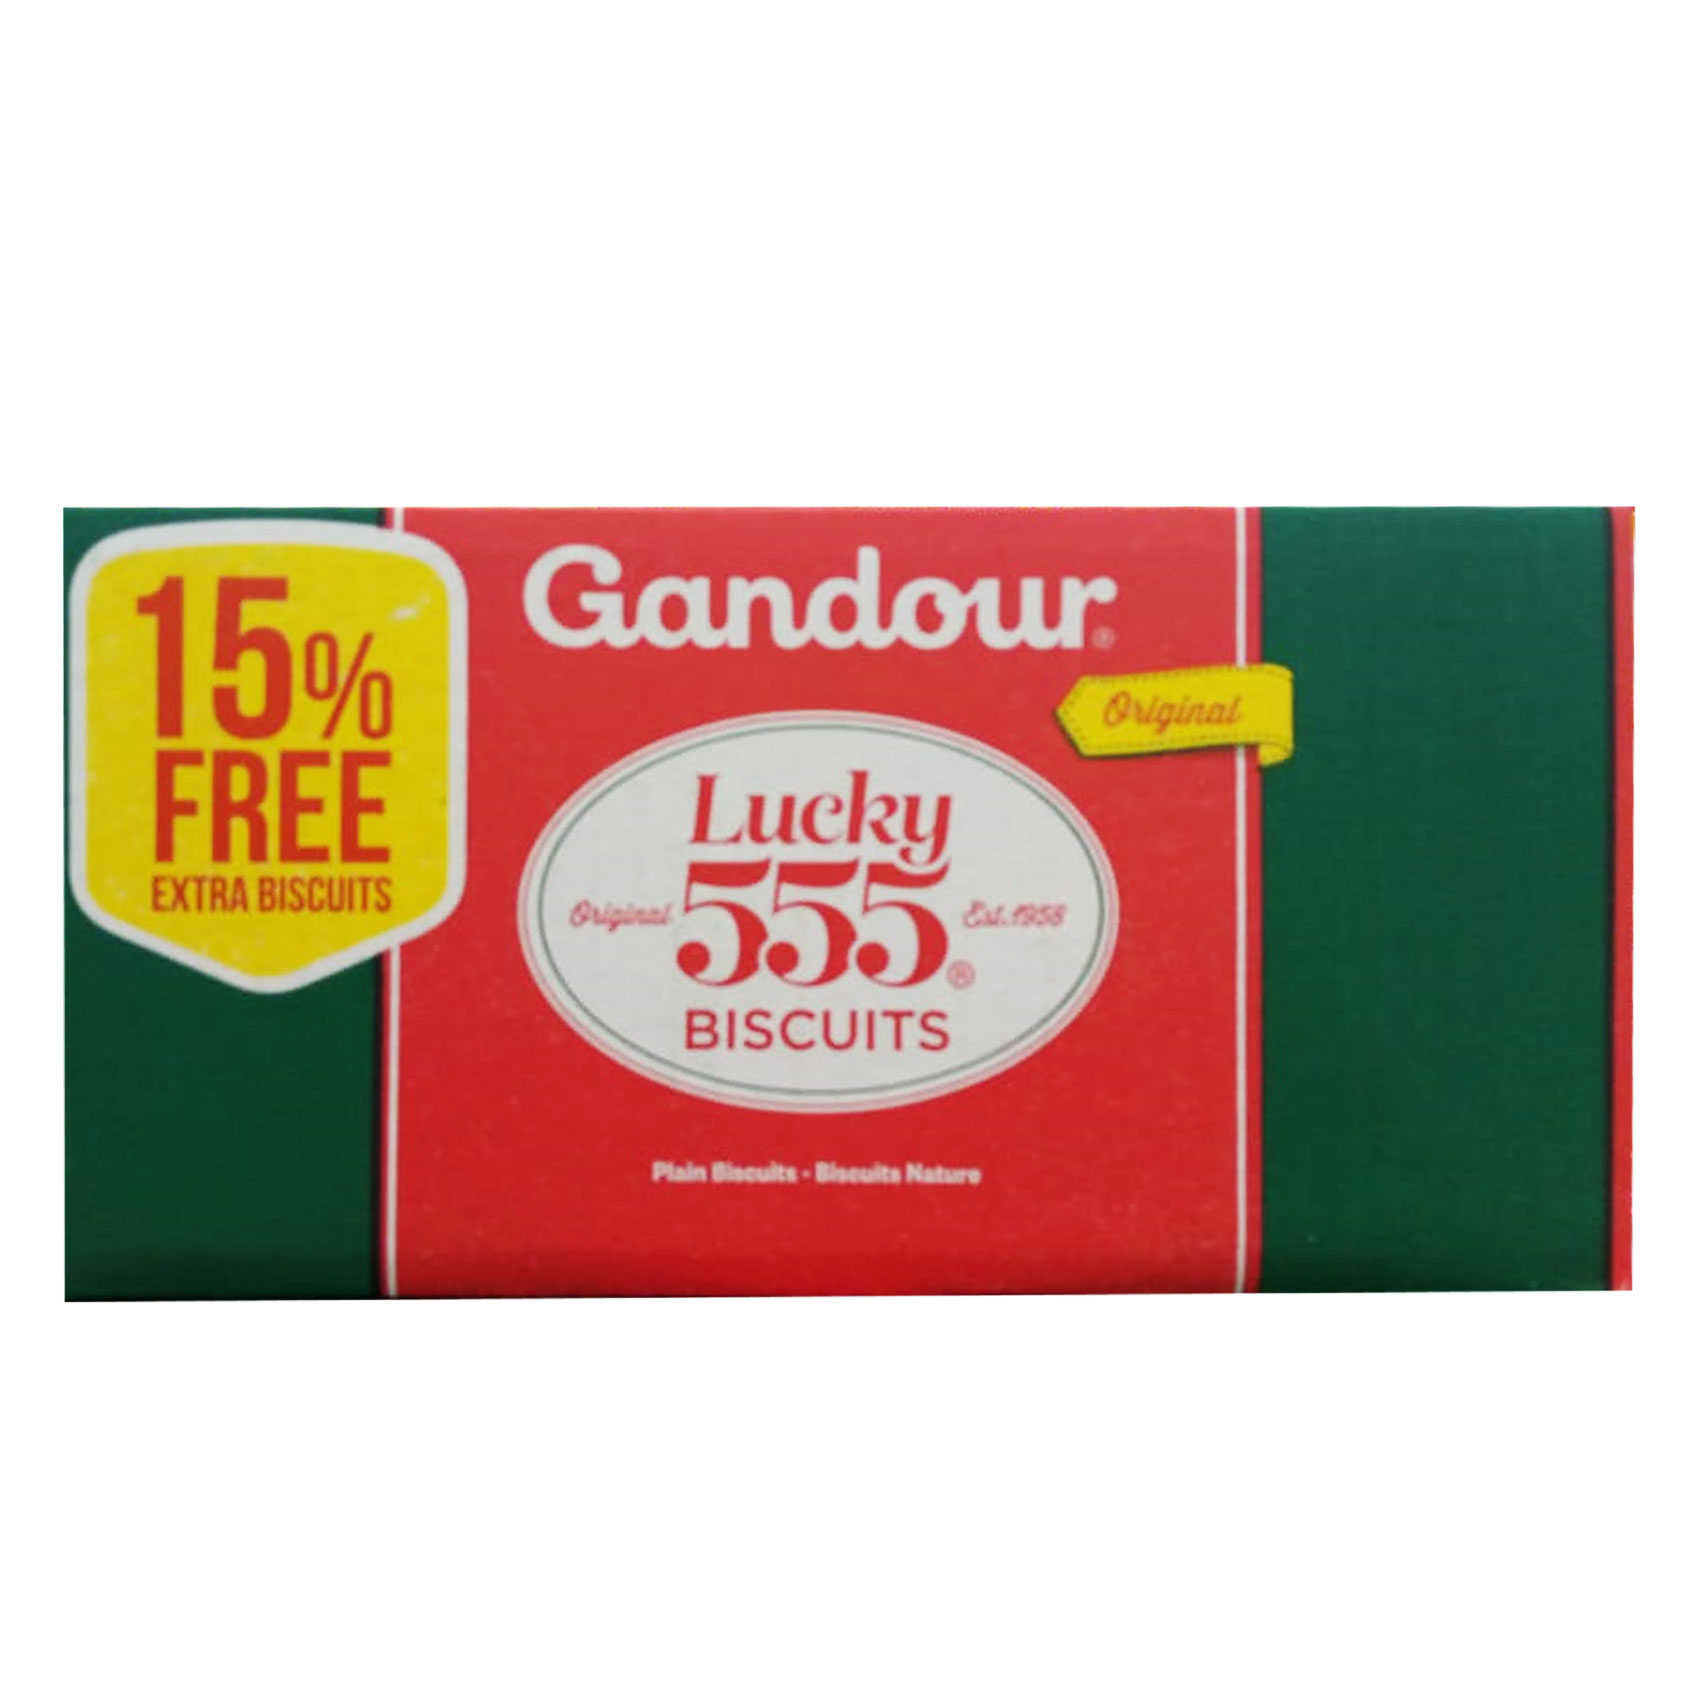 Gandour Lucky 555 Biscuits 82GRx8